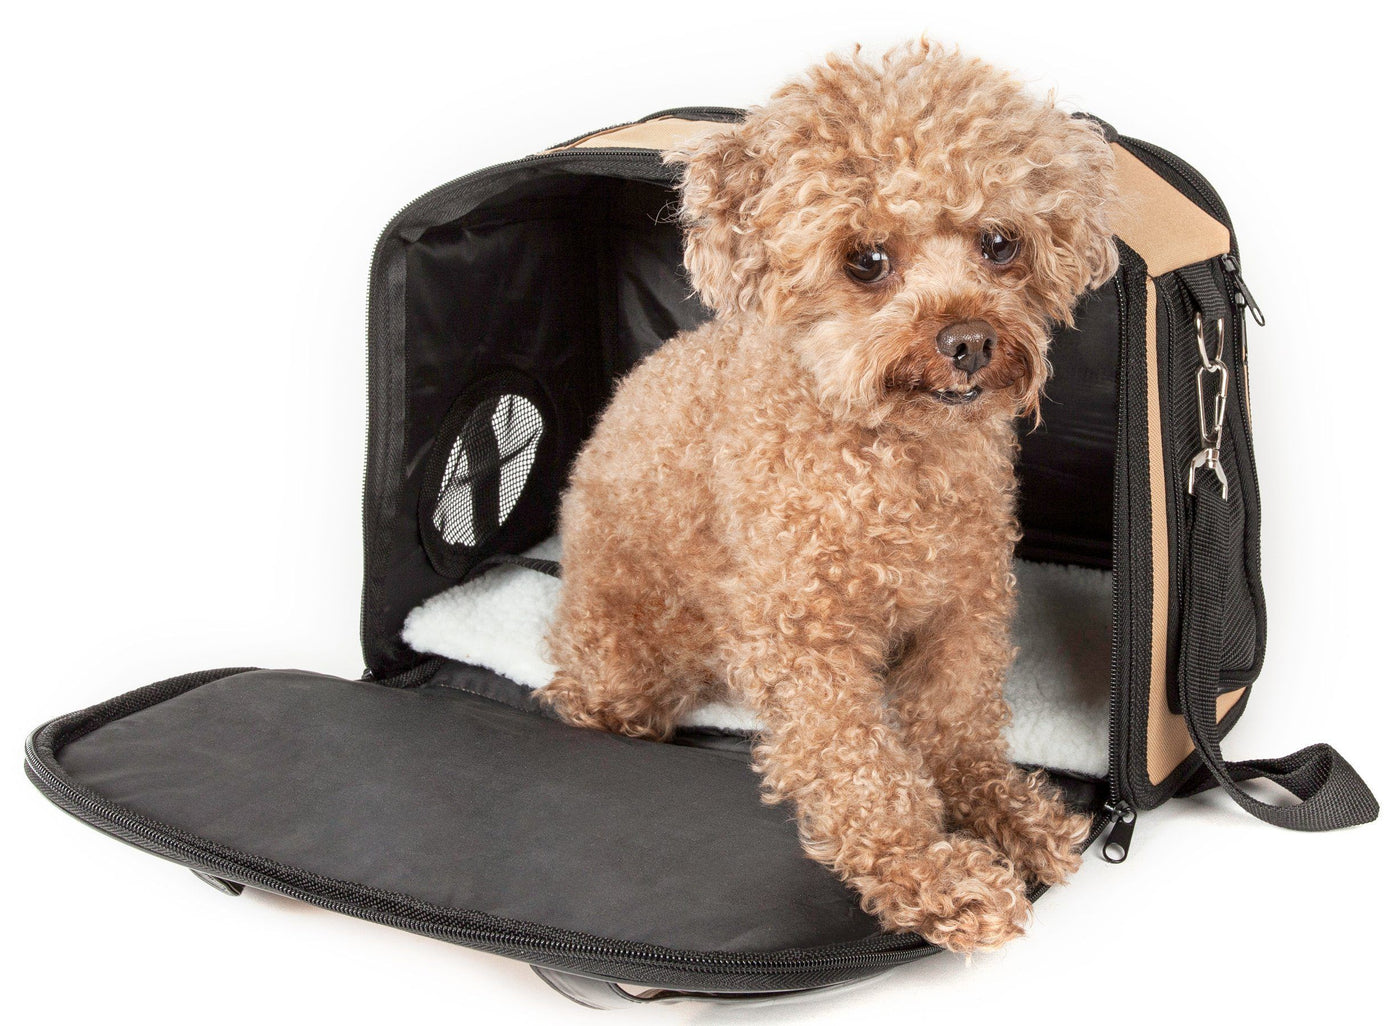 Pet Life Airline Approved Mystique Fashion Pet Carrier - Black